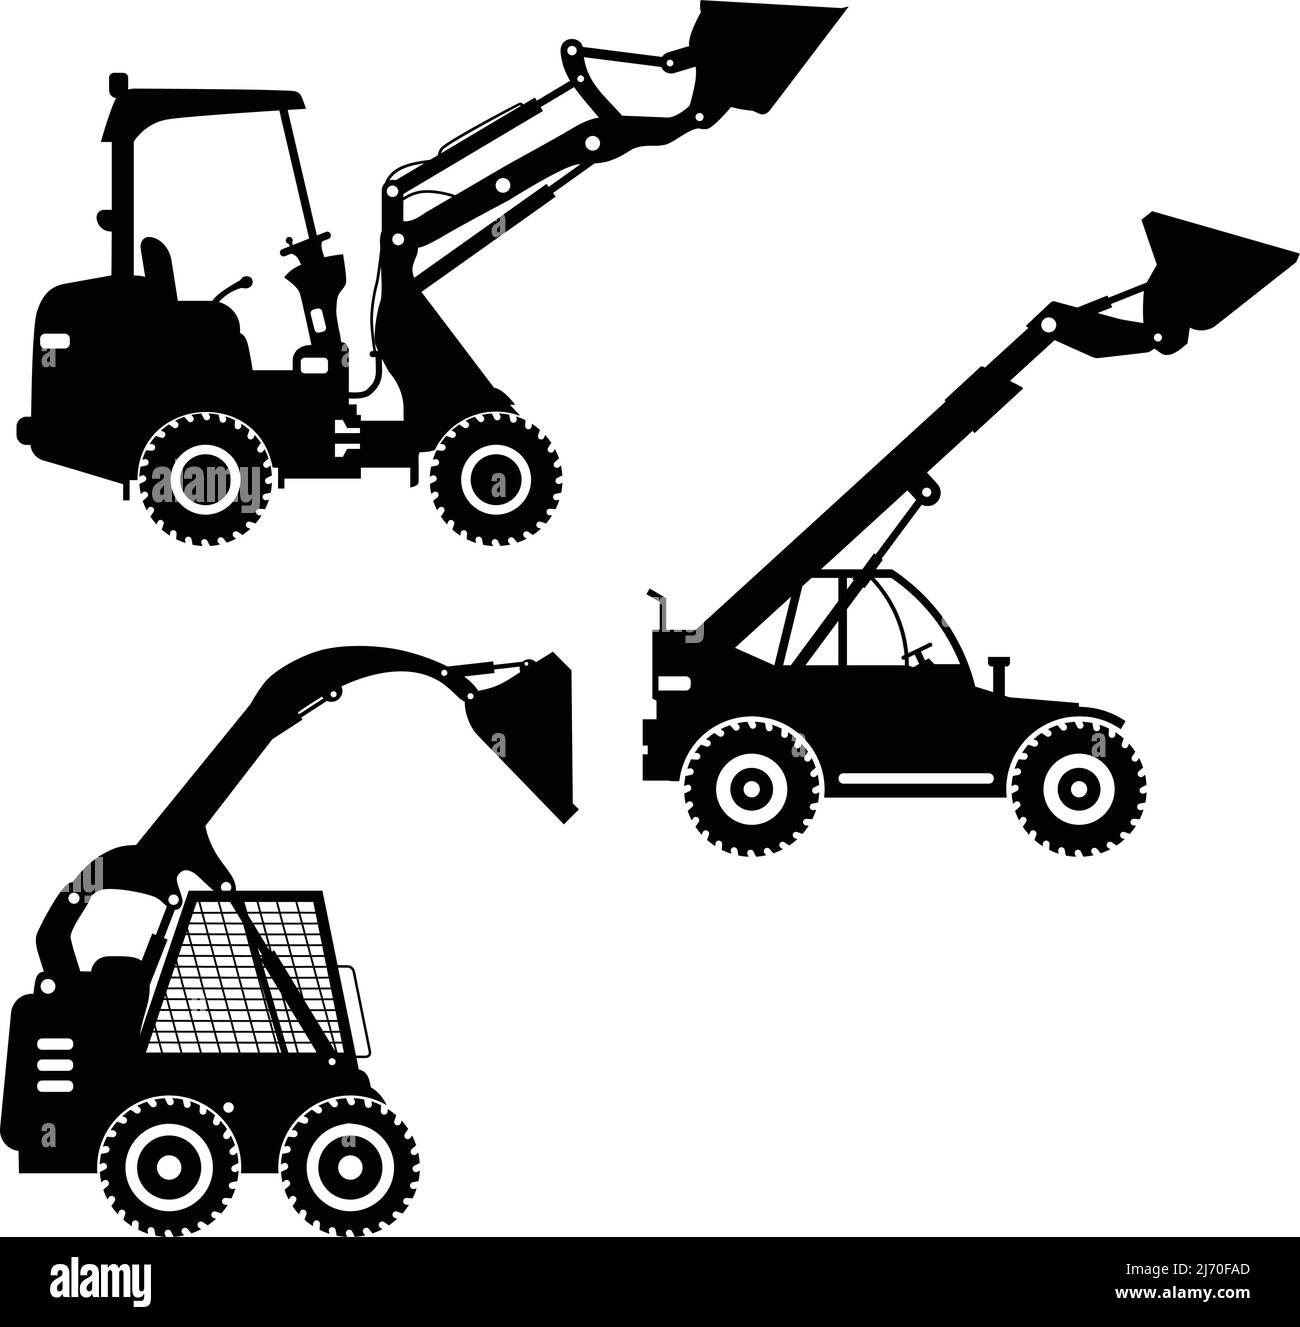 Skid steer loaders. Heavy construction machines. Vector illustration Stock Vector